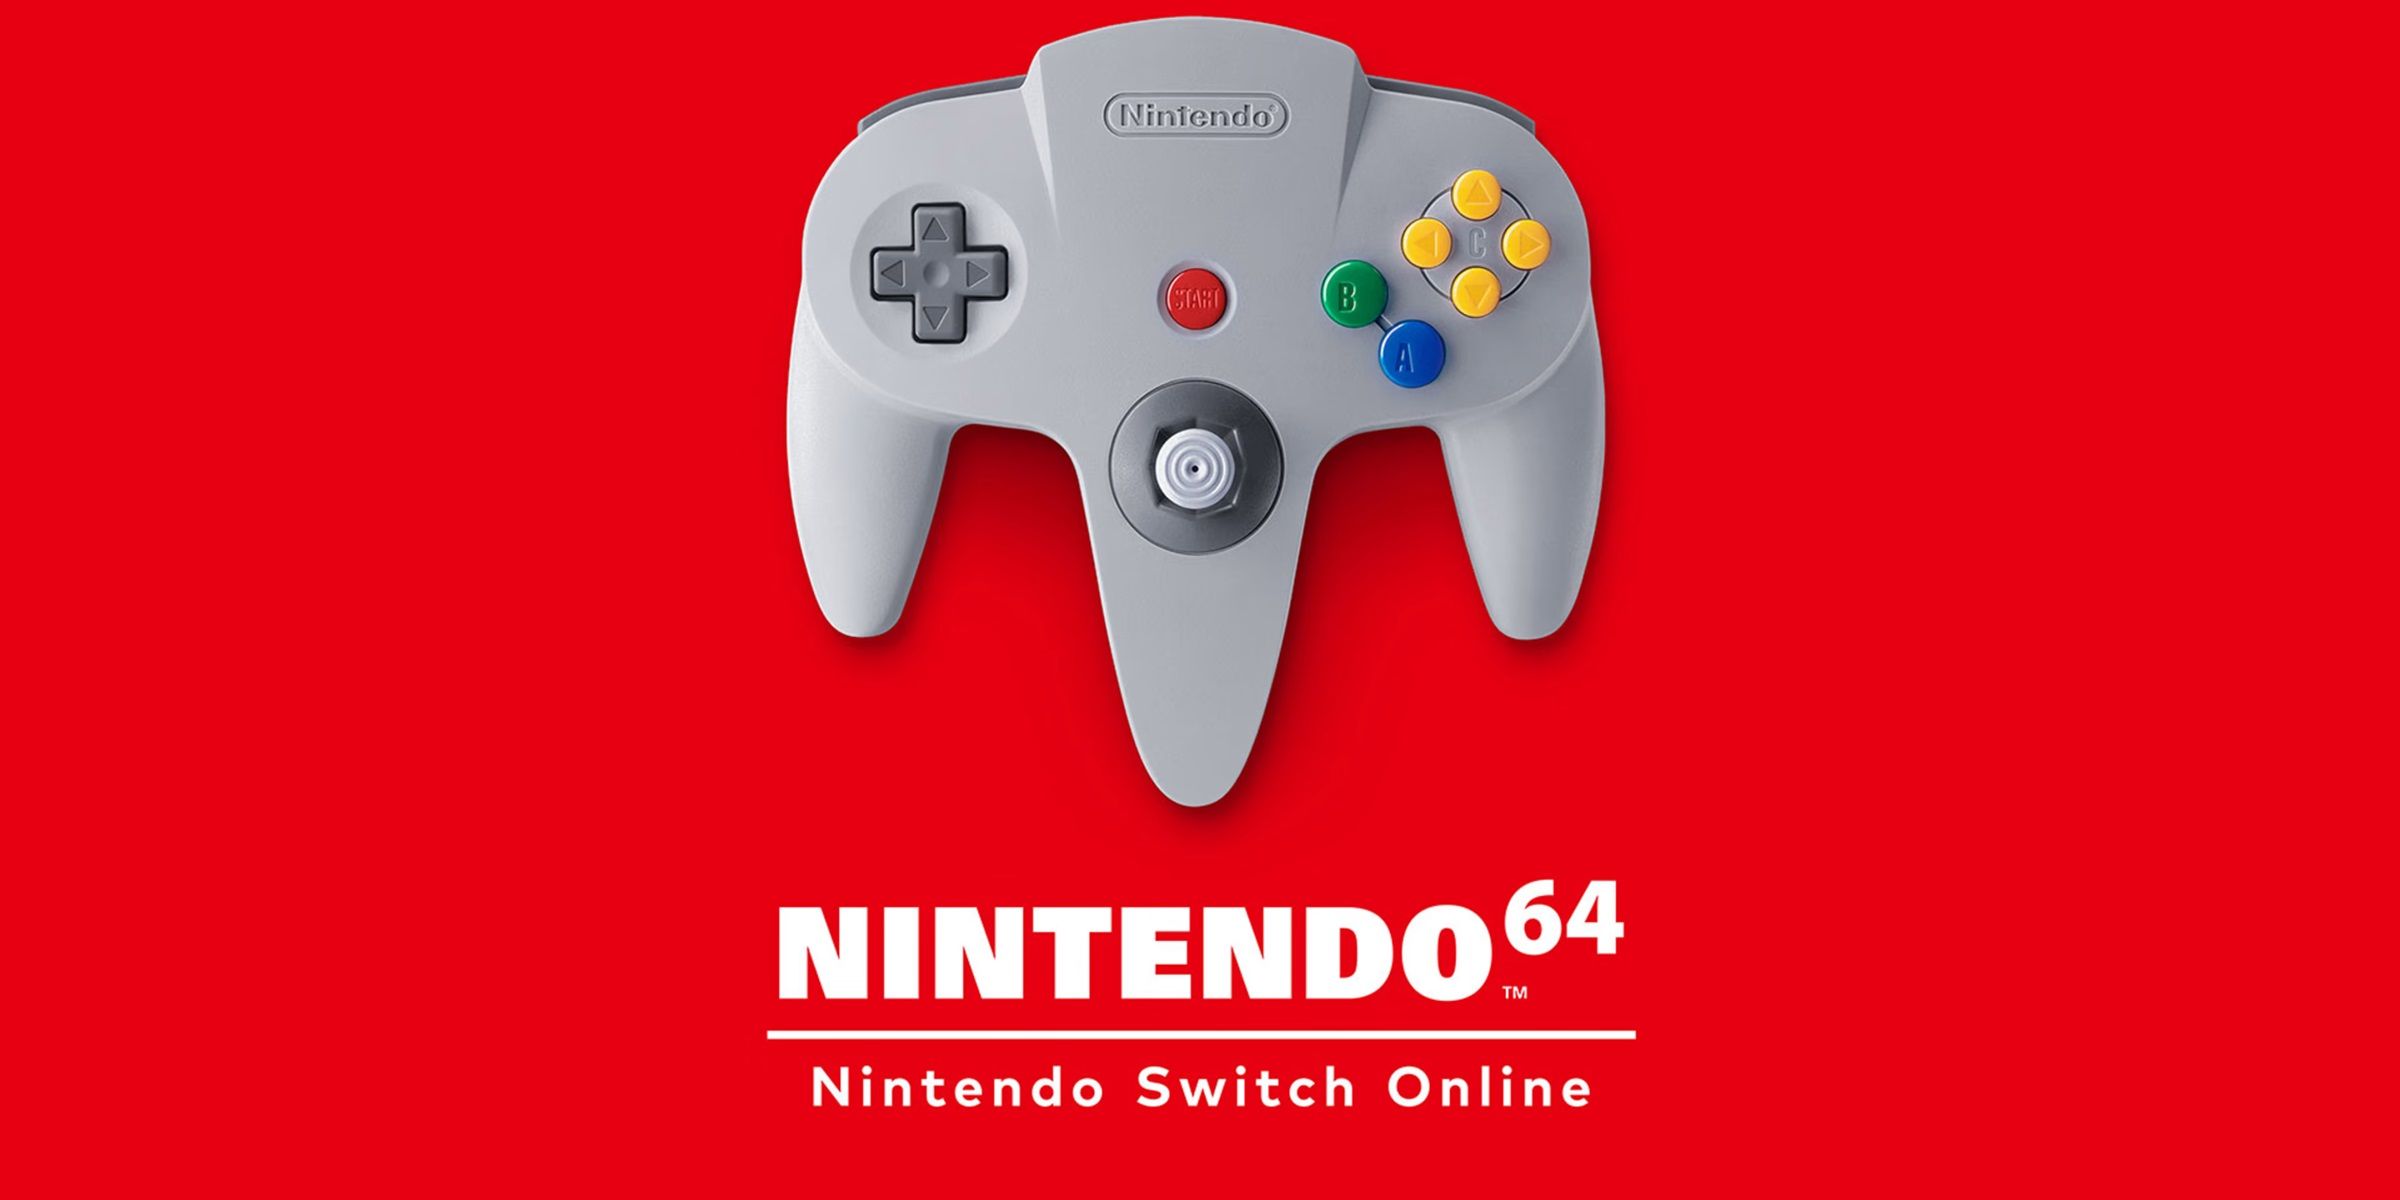 nintendo 64 switch online controller